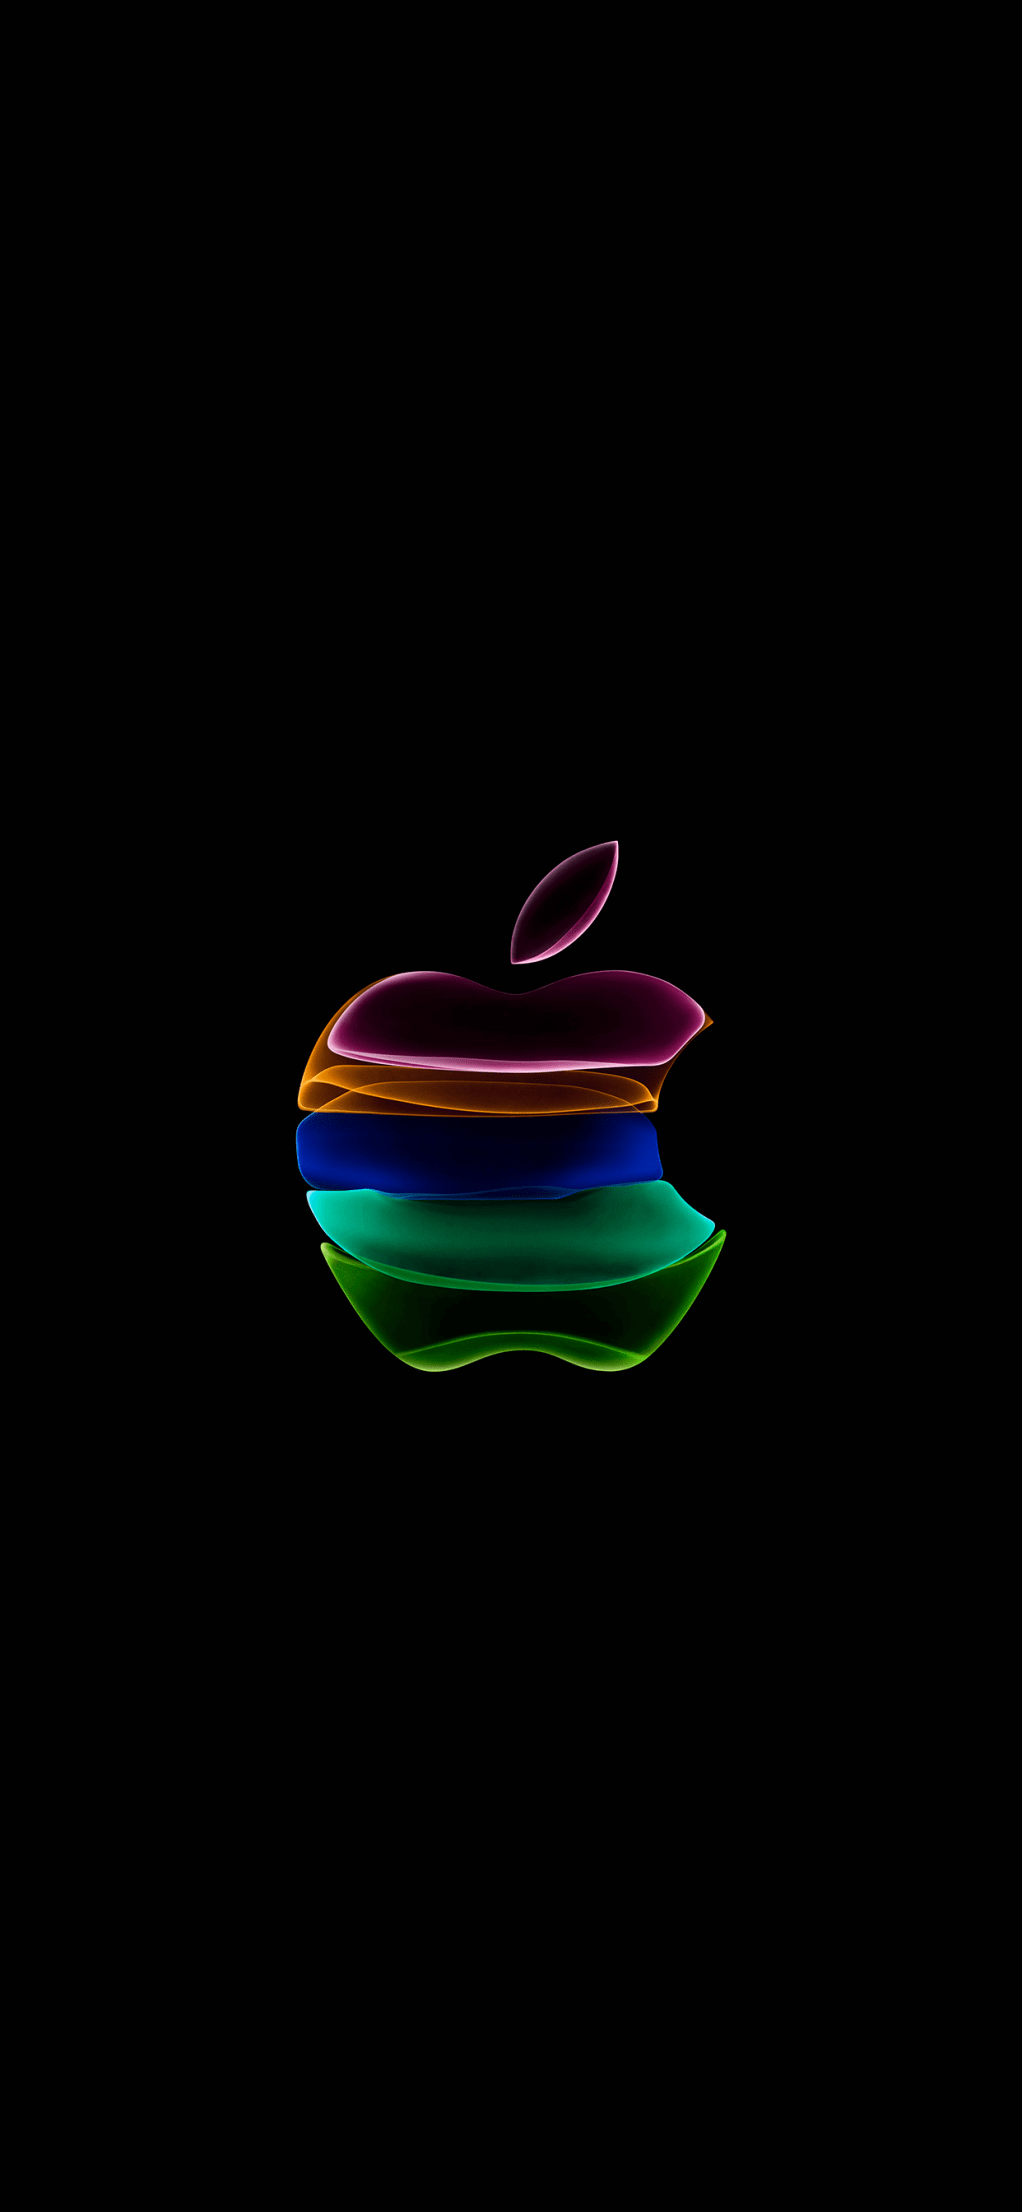 iPad. Apple logo wallpaper iphone .com